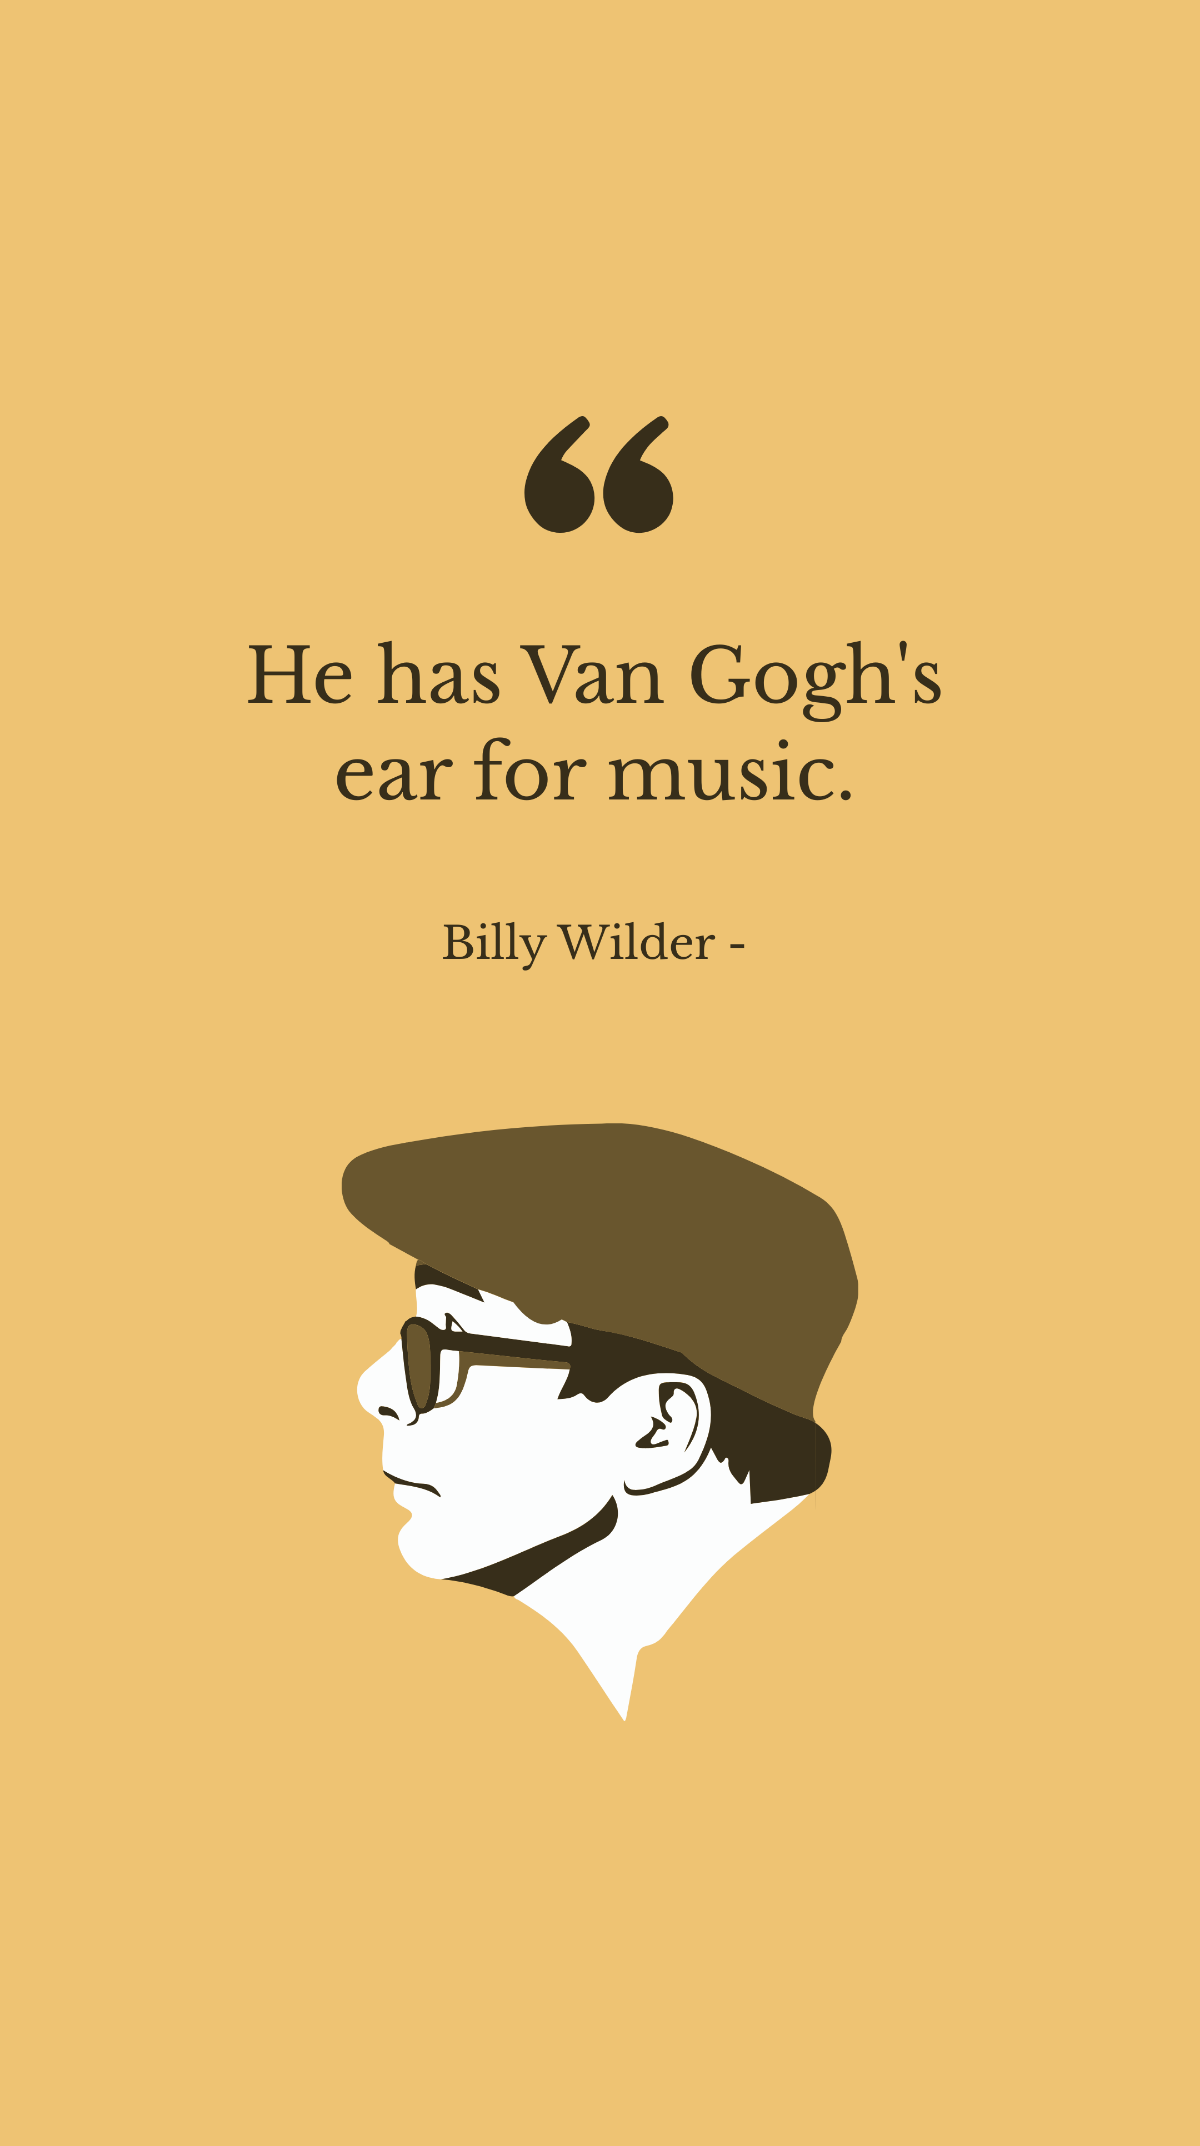 Billy Wilder - He has Van Gogh's ear for music.